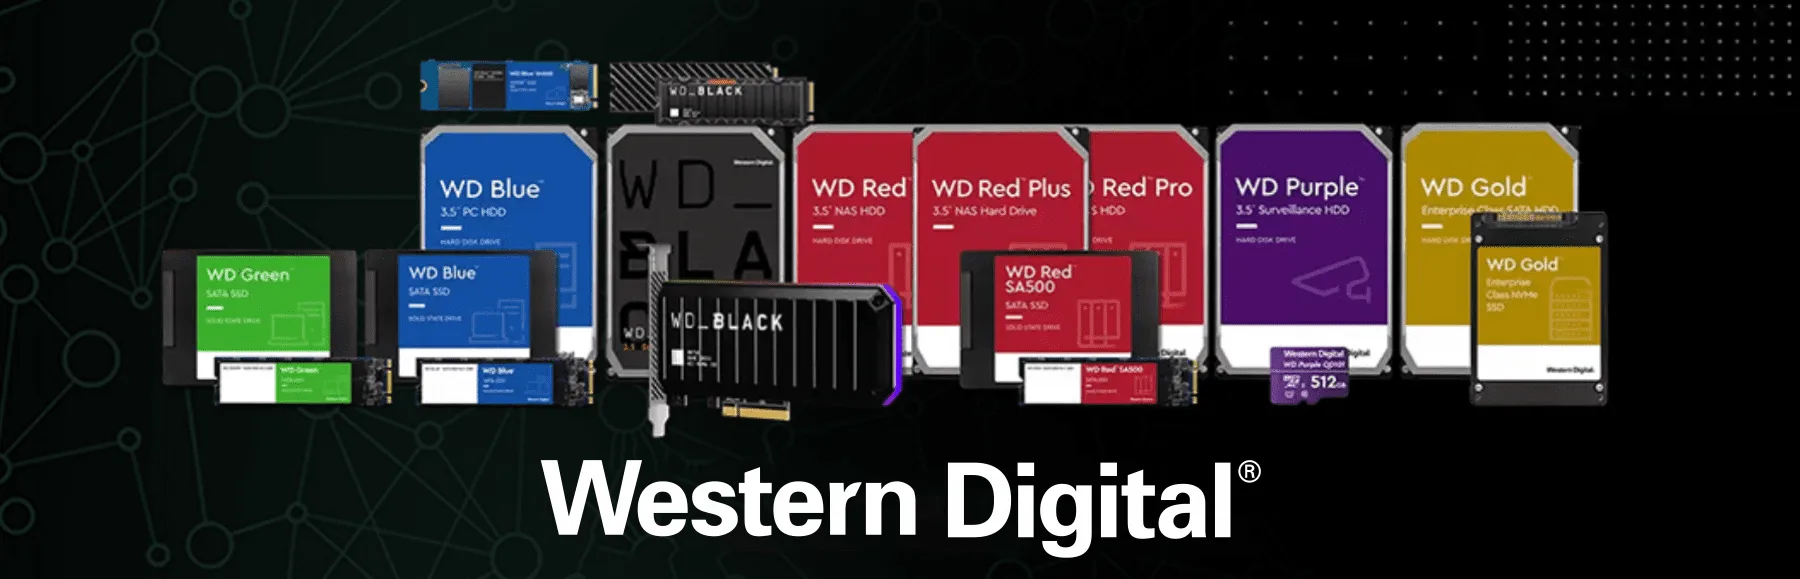 Productos Western Digital